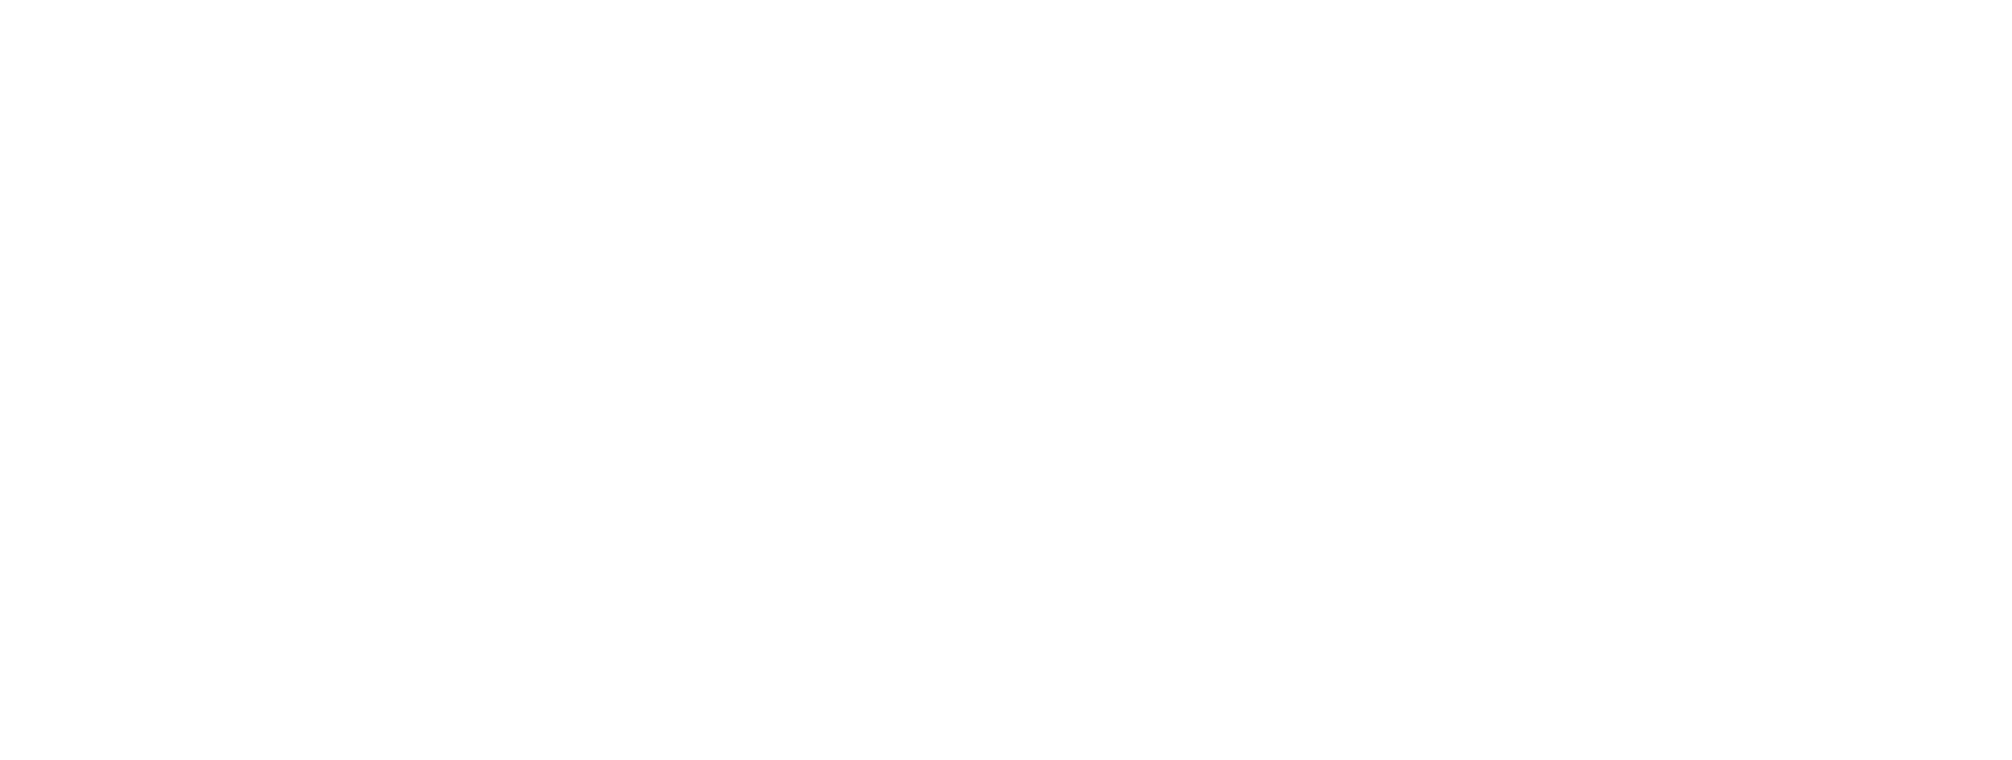 Wormald House logo